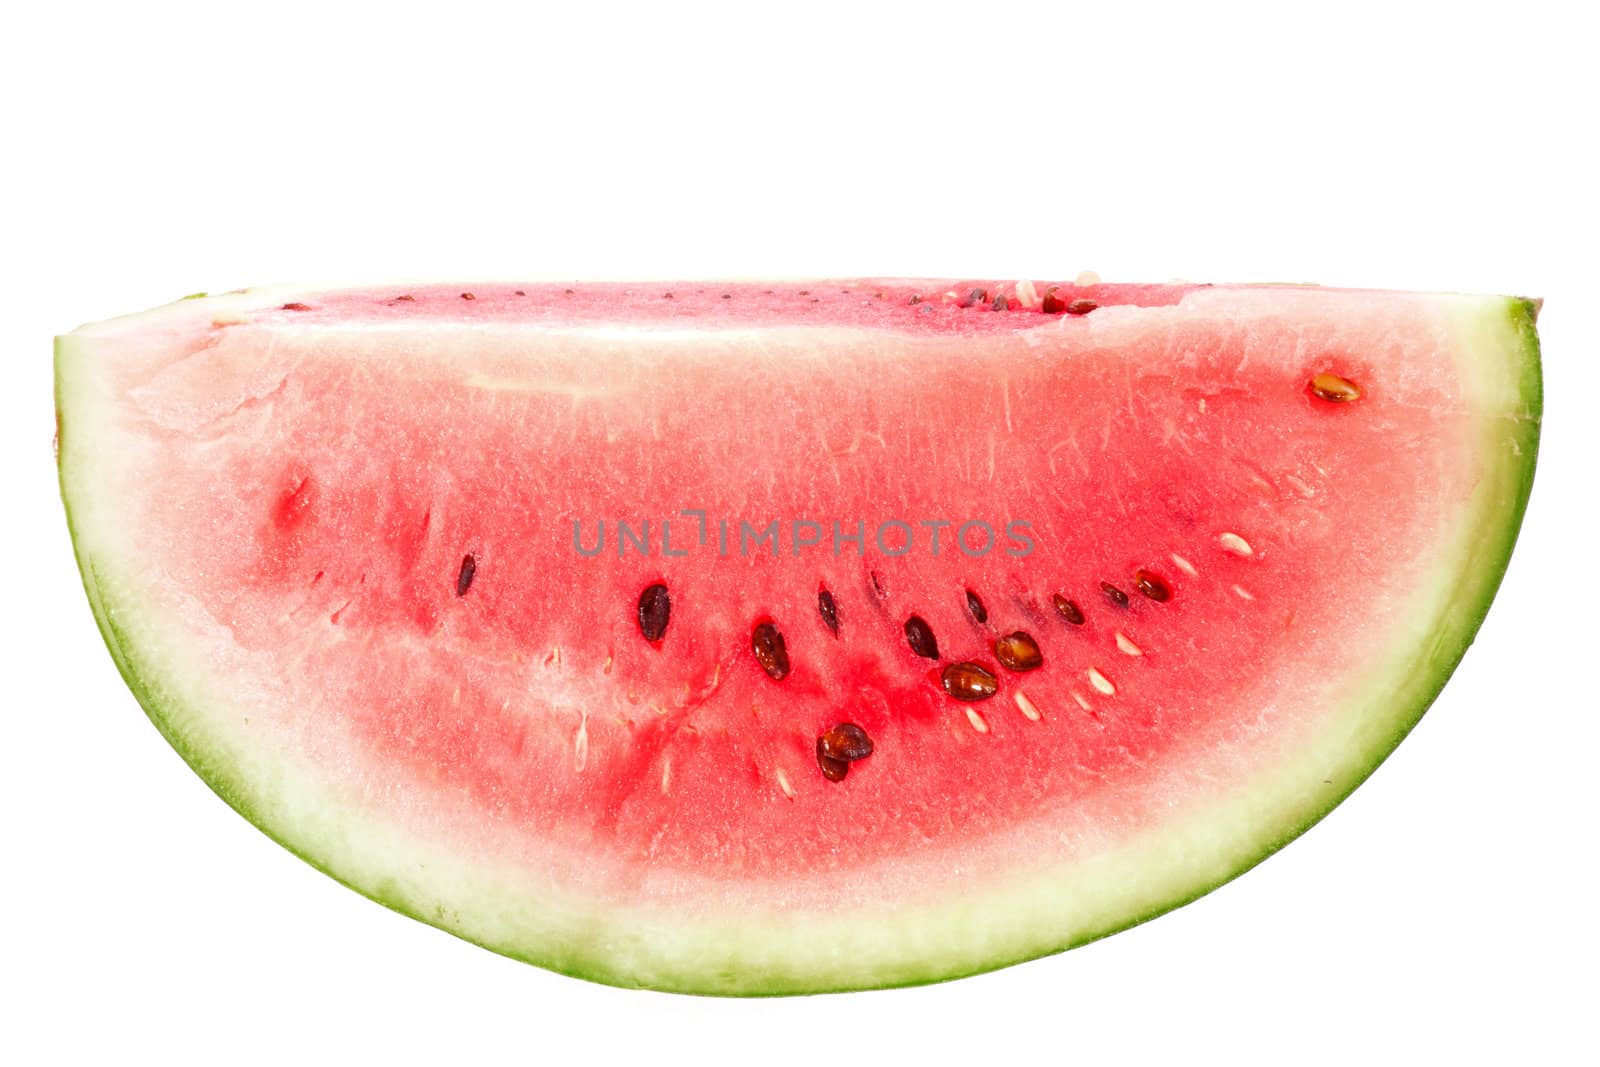 Watermelon slice by aguirre_mar